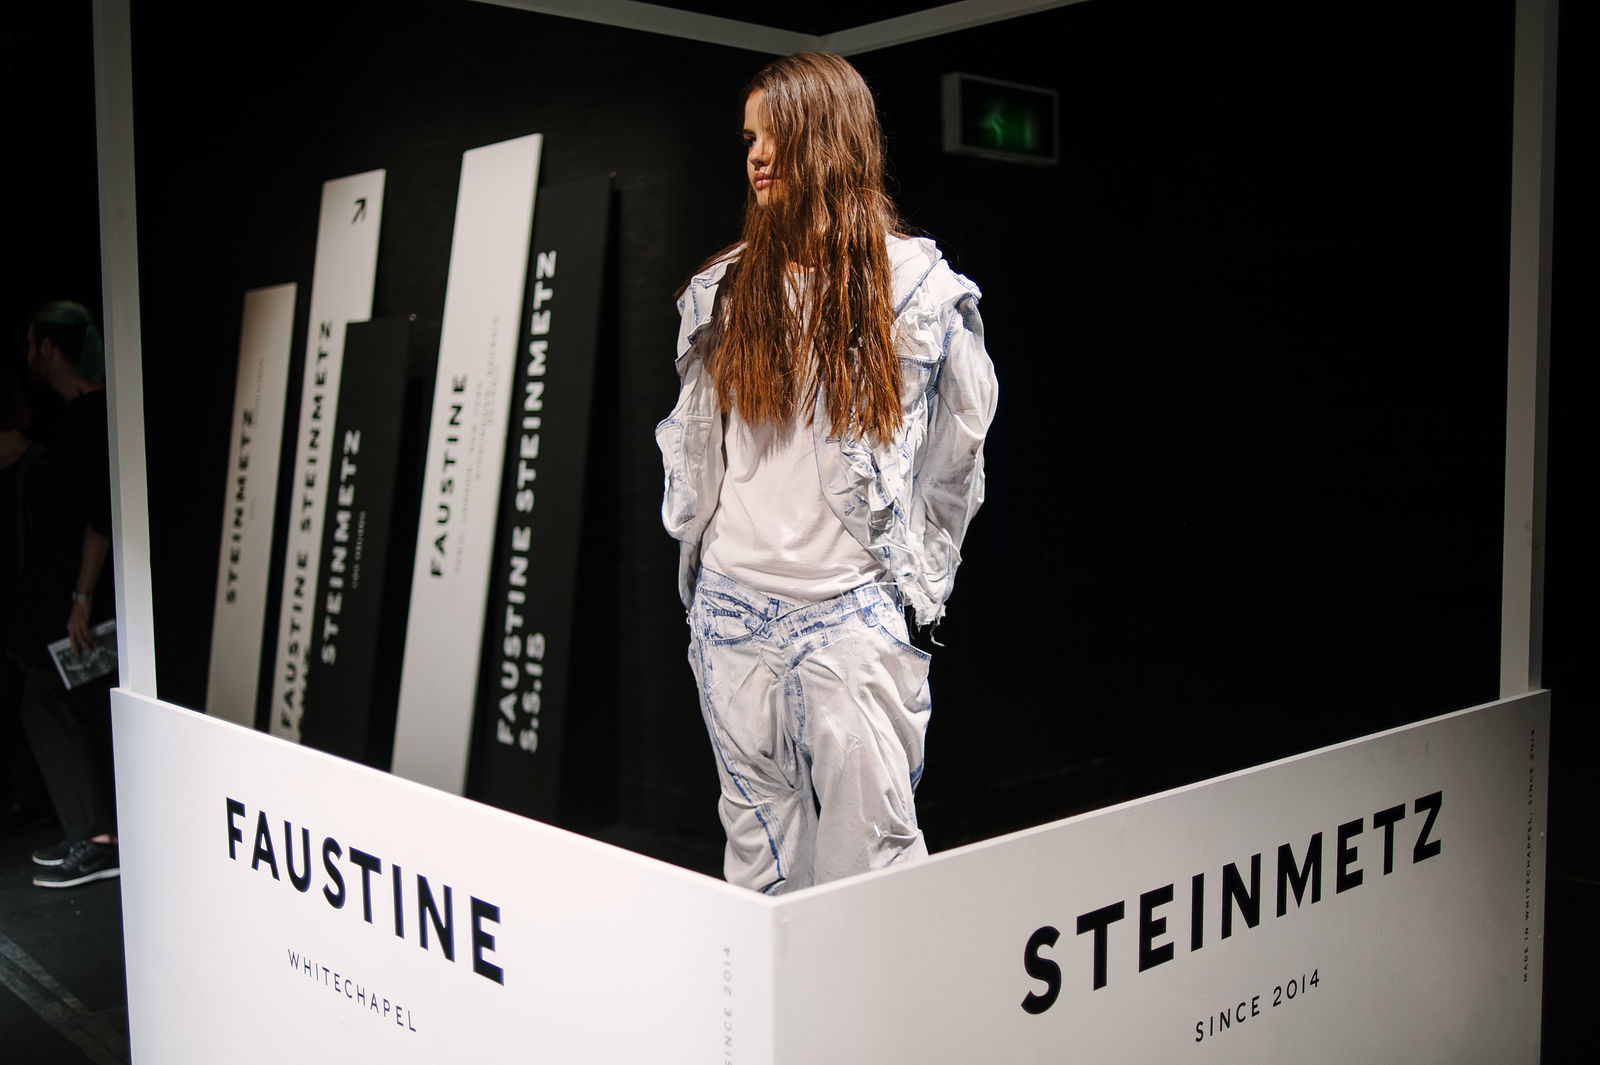 Faustine Steinmetz